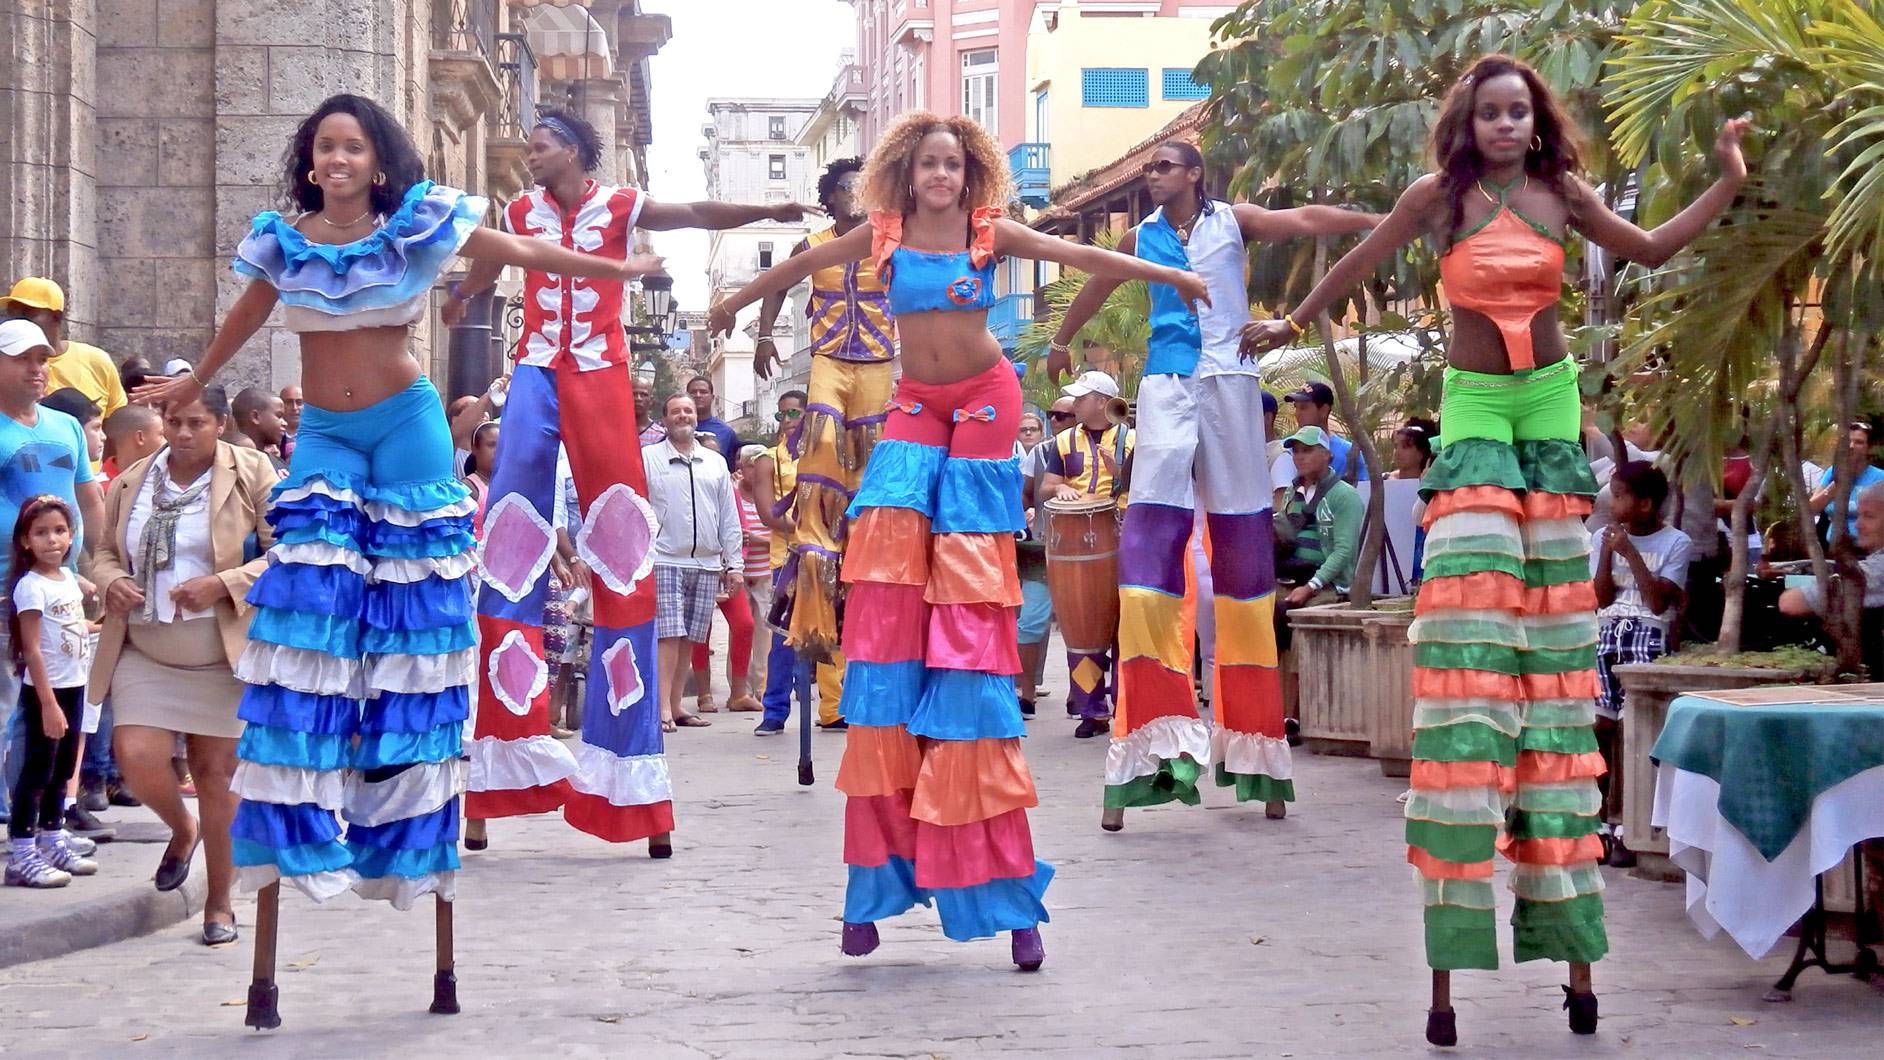 Street performers on stilts in Old Havana